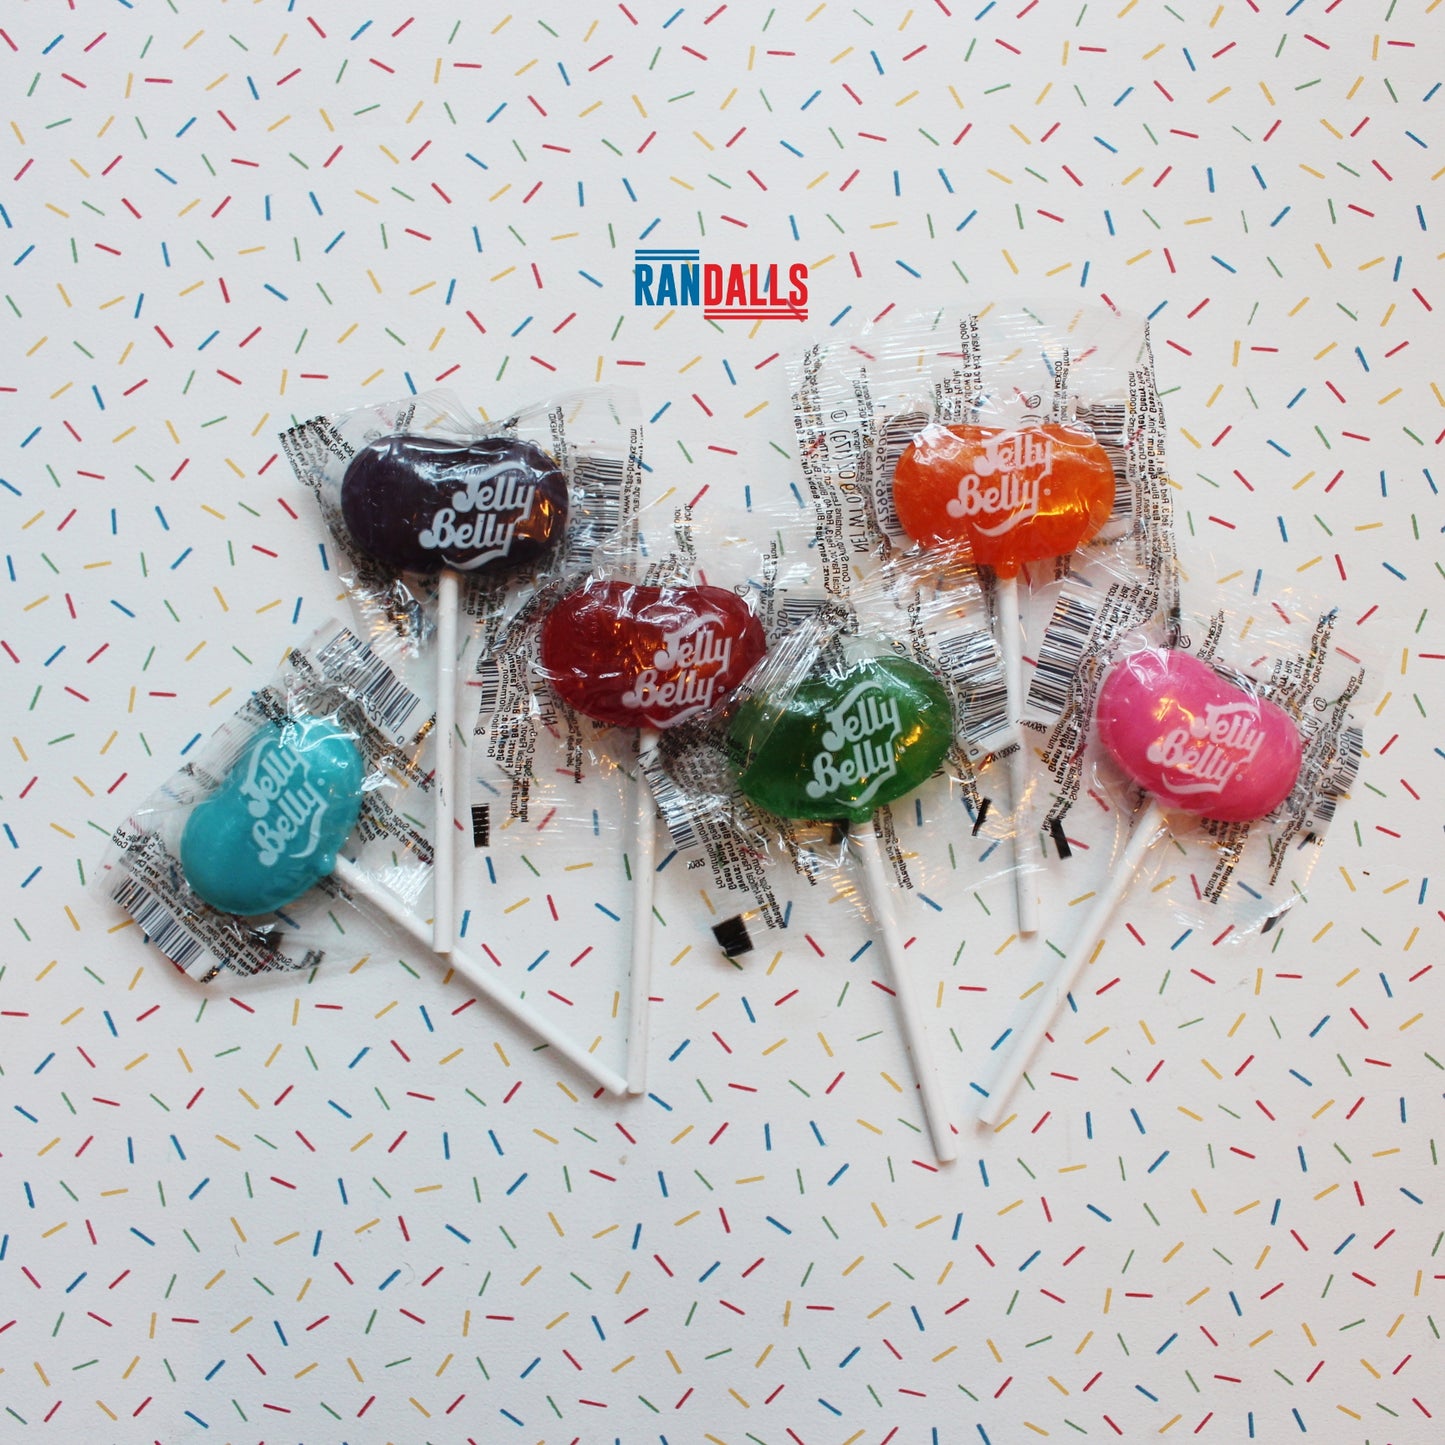 jelly belly lollipops, hard candy, berry blue, grape, cherry, green apple, tangerine, bubblegum, usa, randalls